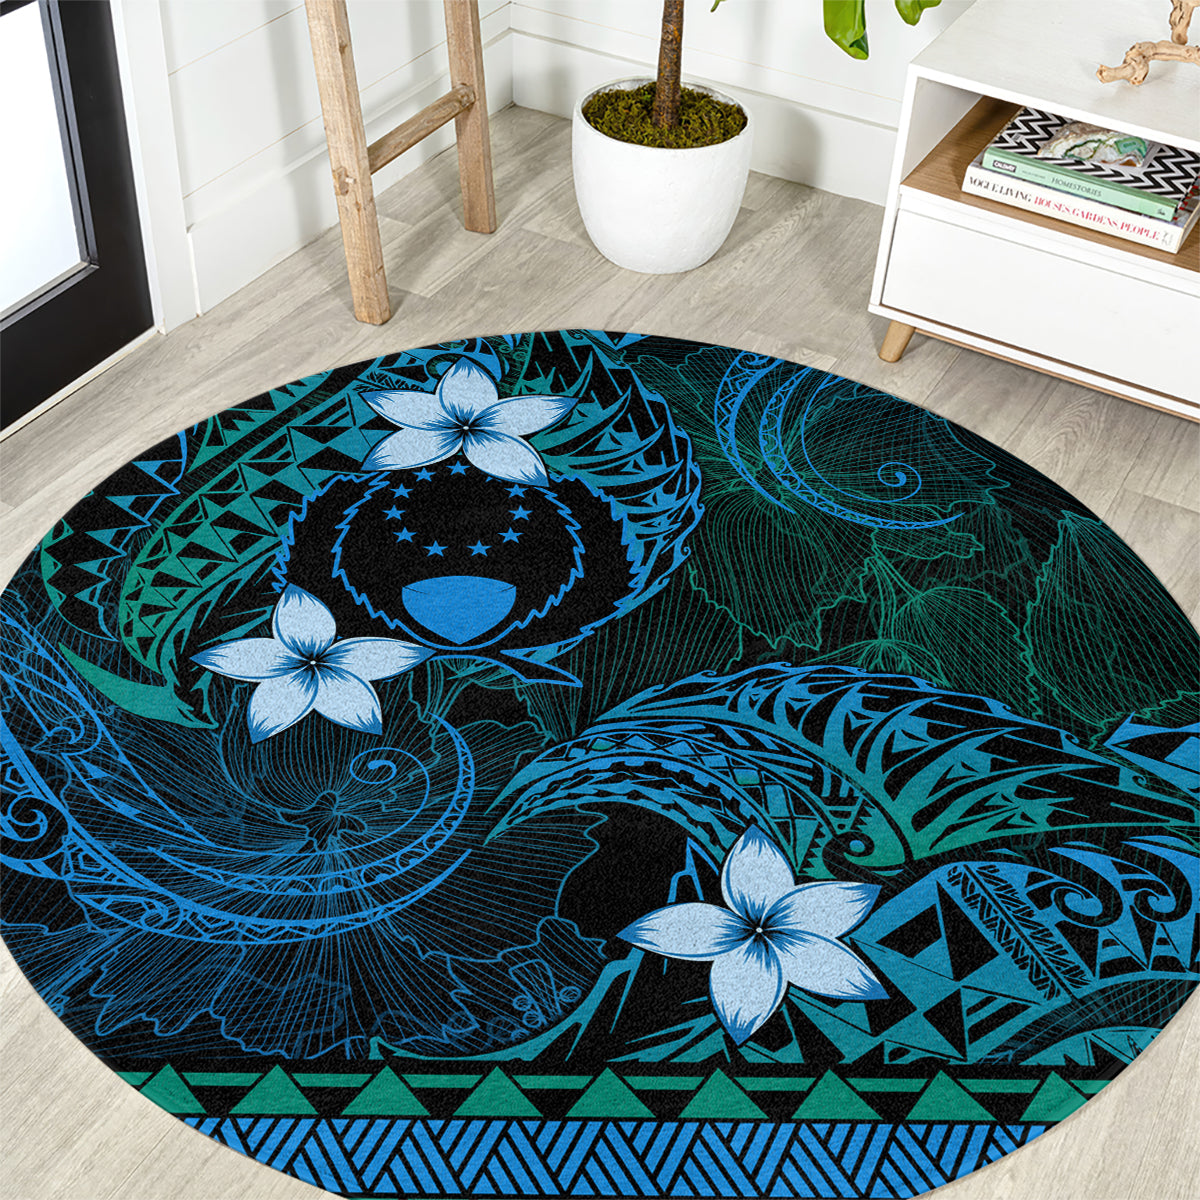 FSM Pohnpei State Round Carpet Tribal Pattern Ocean Version